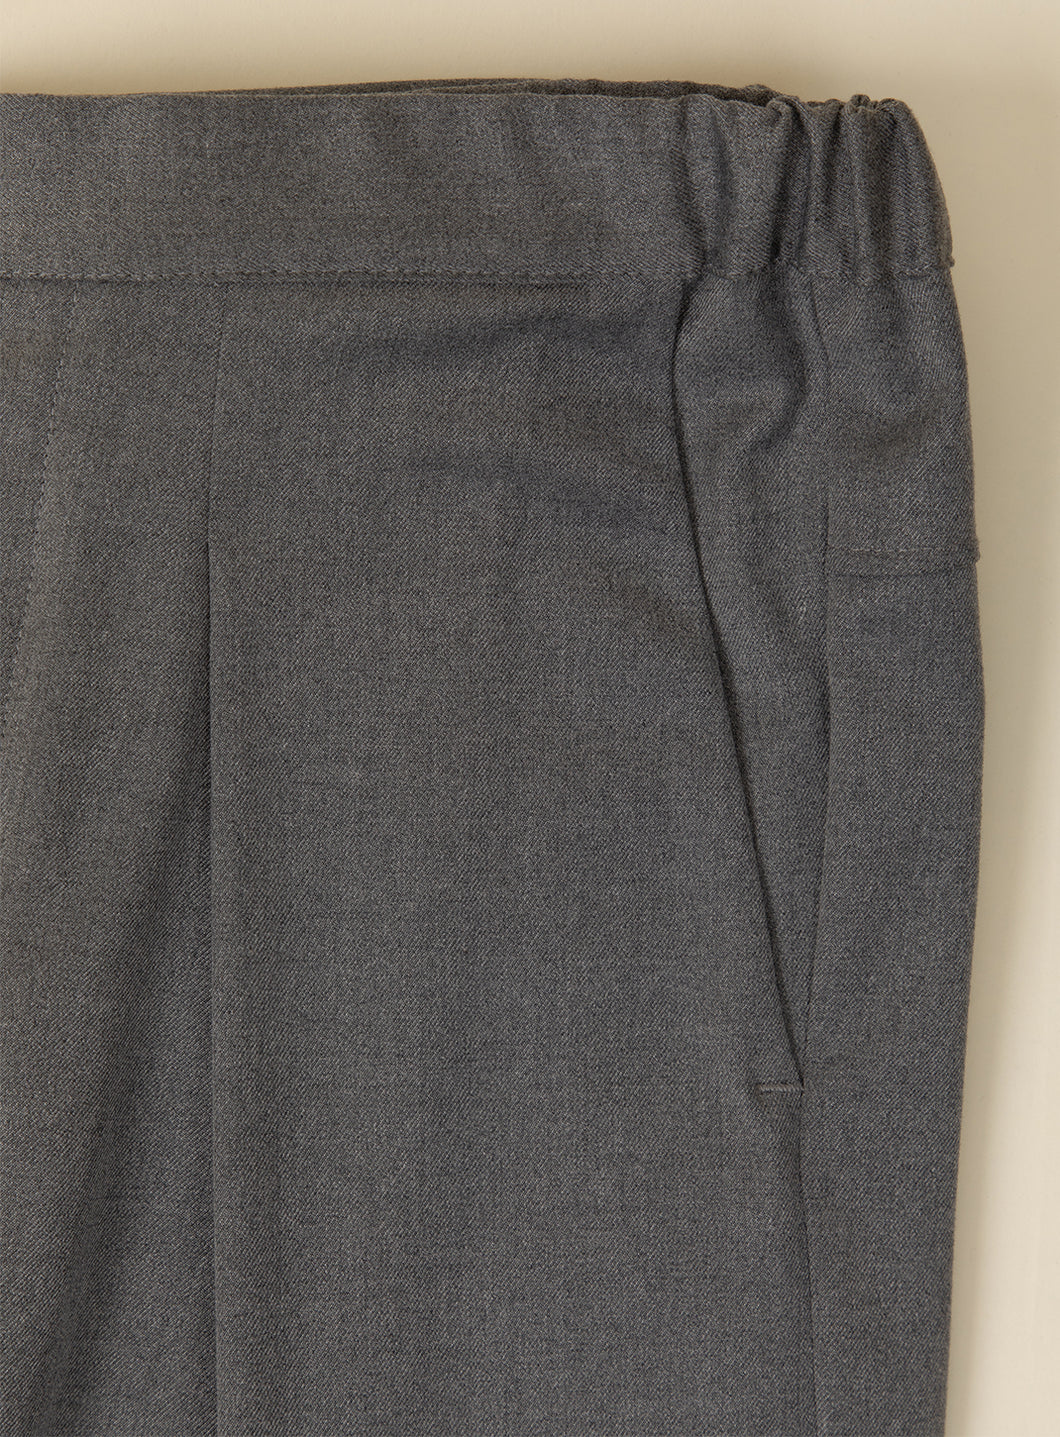 Elastic Waist Pants with Deep Pleats in Heather Grey Serge Fabric